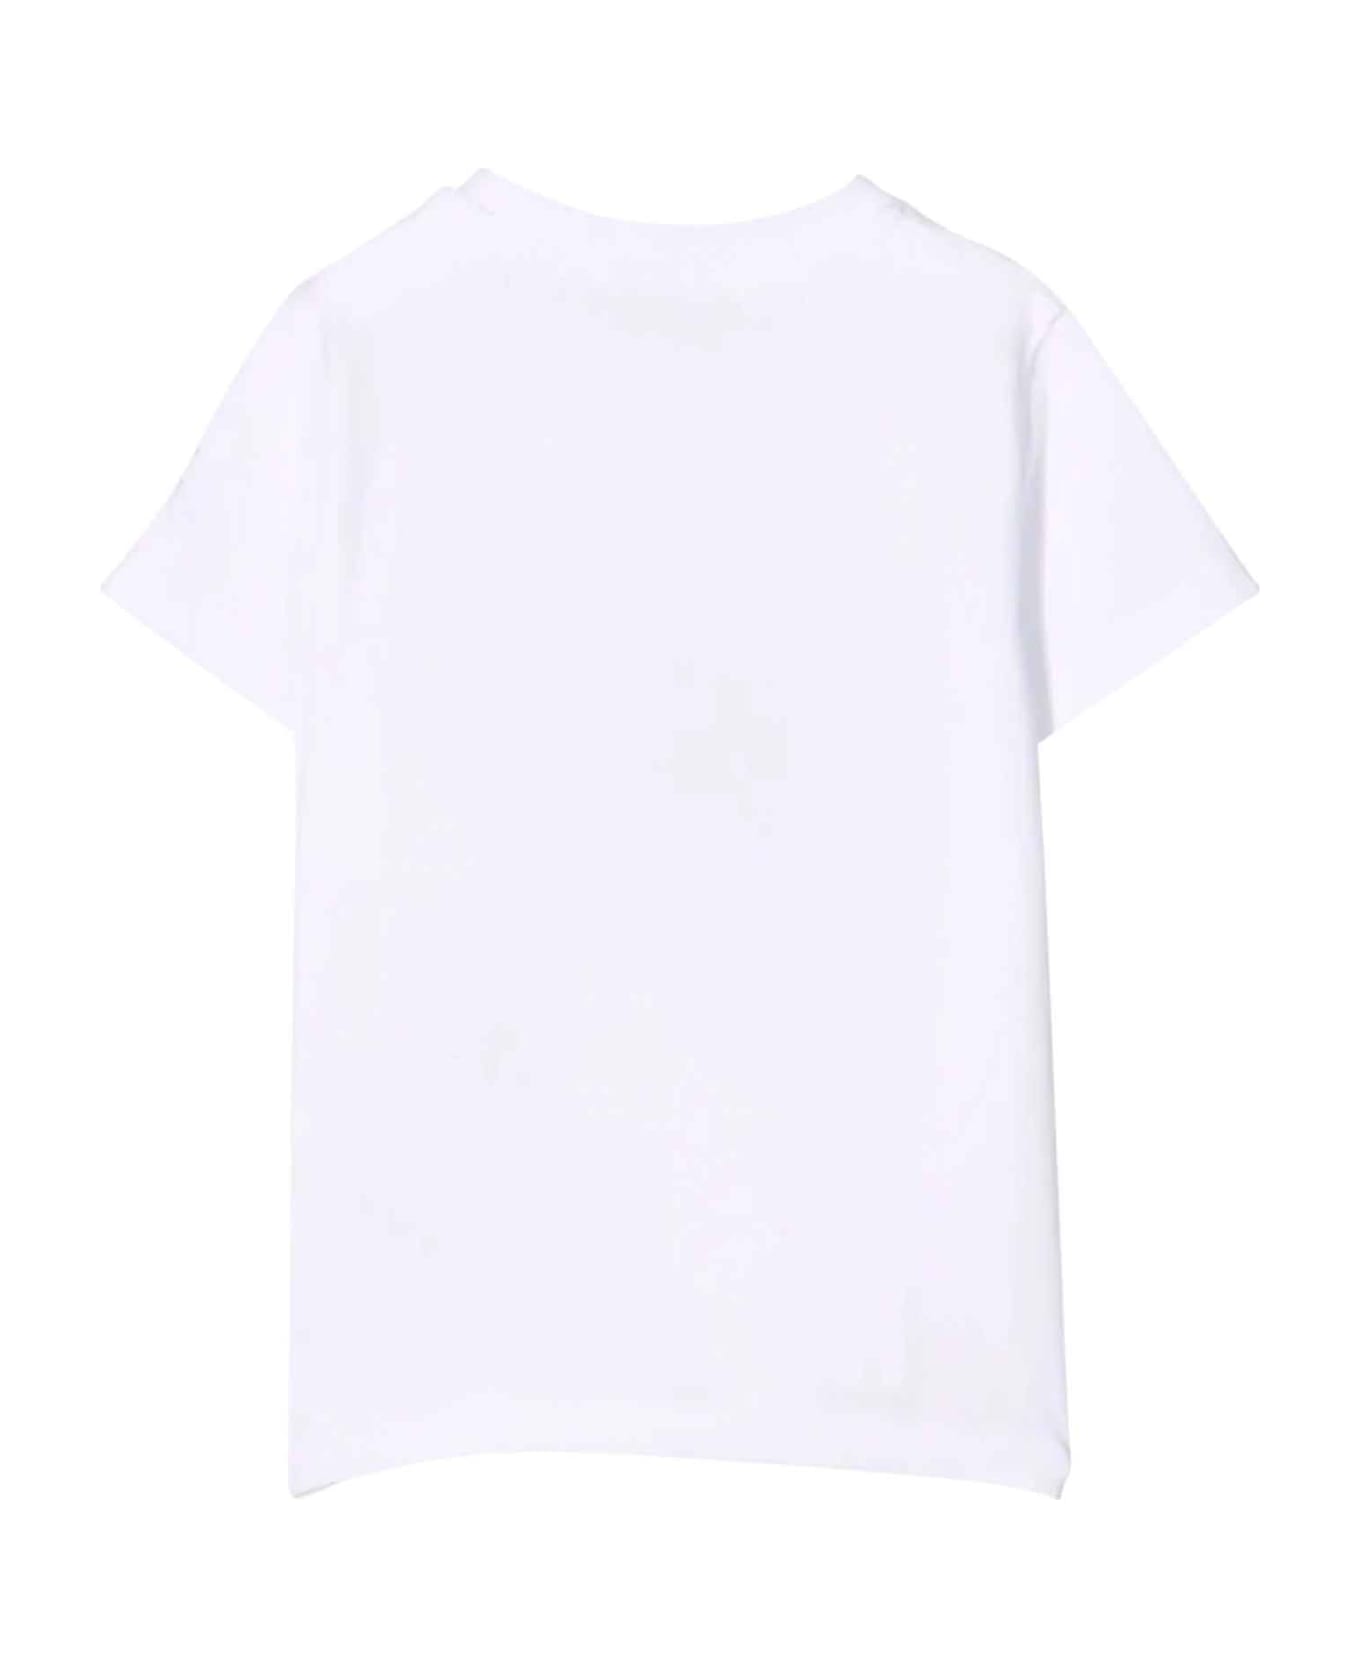 Moncler White T-shirt With Print - WHITE